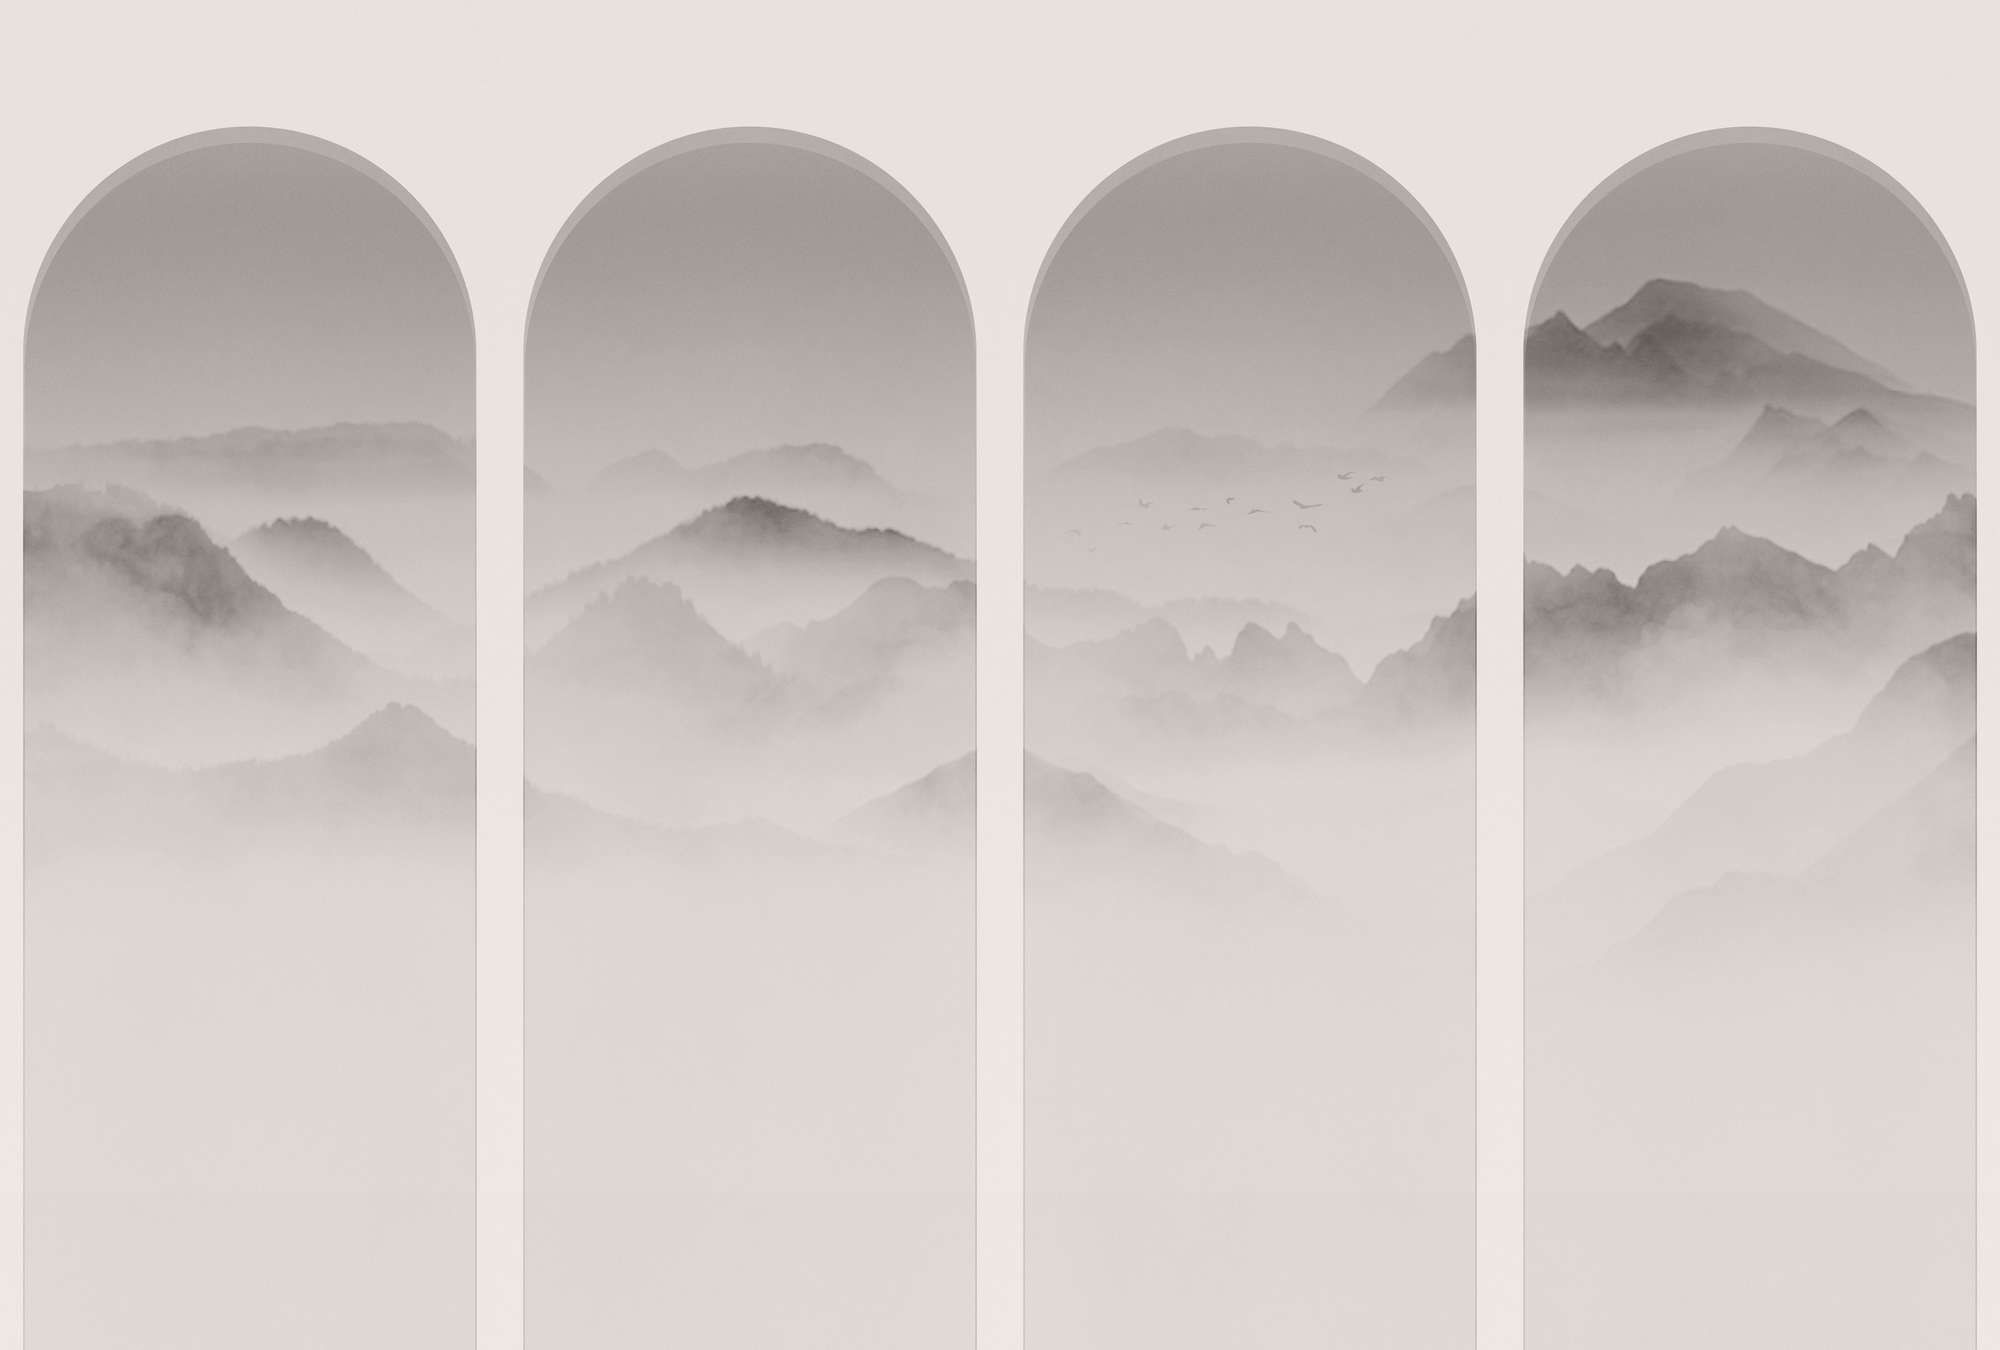             Digital behang »vallei« - bergen & mist in bogen - grijs, wit | licht structuurvlies
        